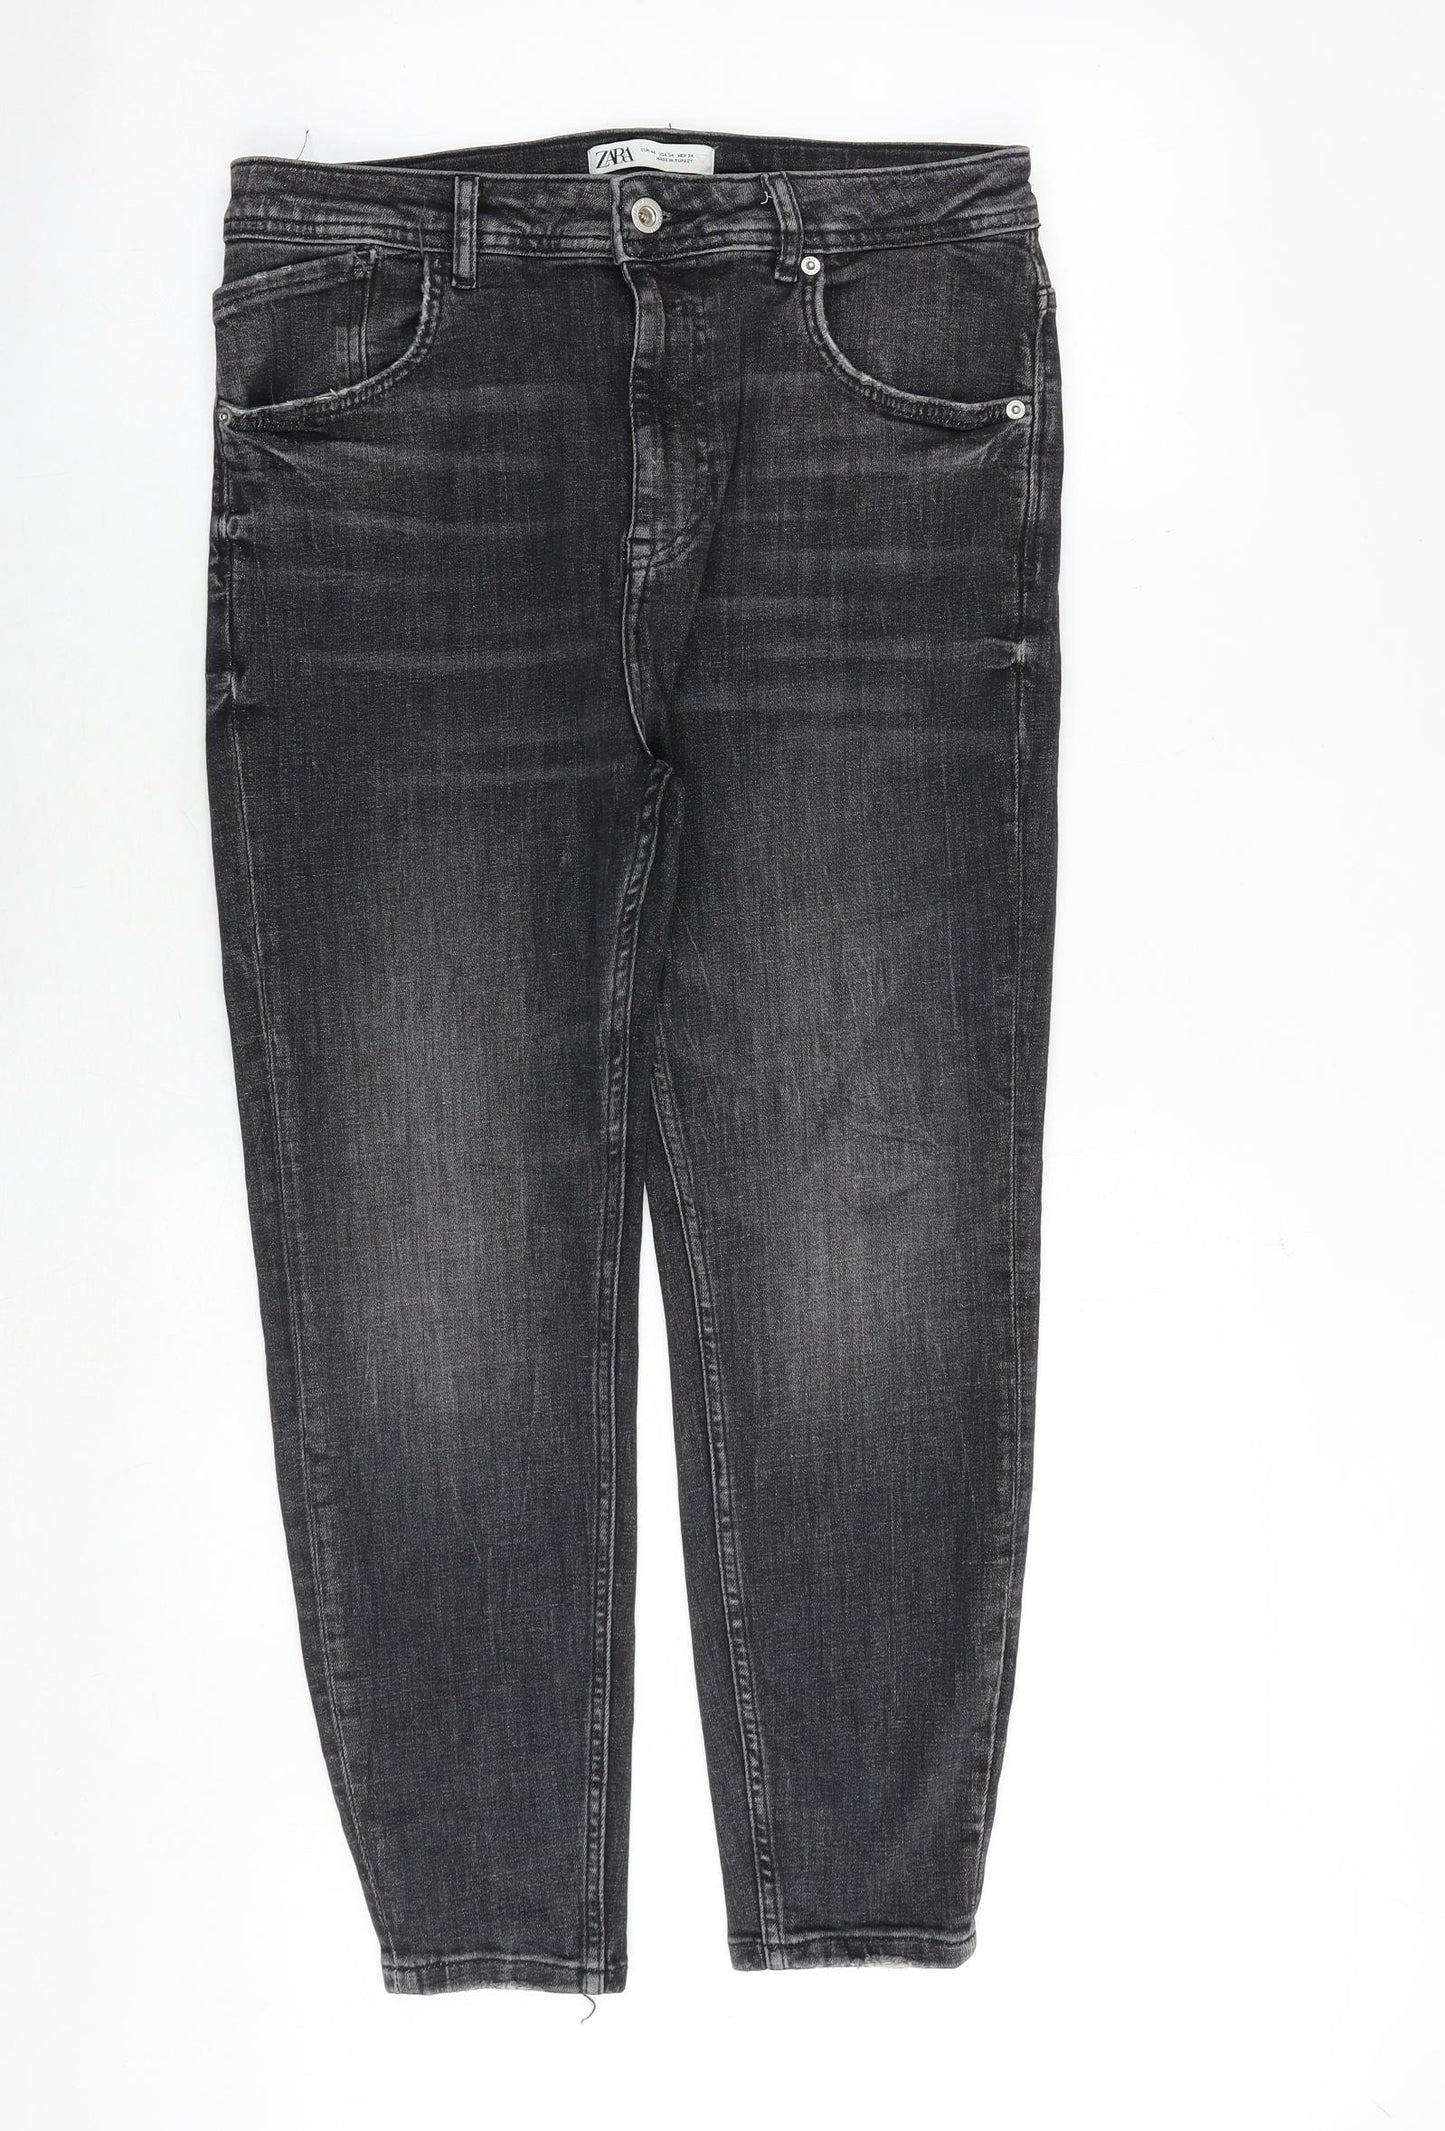 Zara Womens Grey Cotton Boyfriend Jeans Size 14 Regular Zip